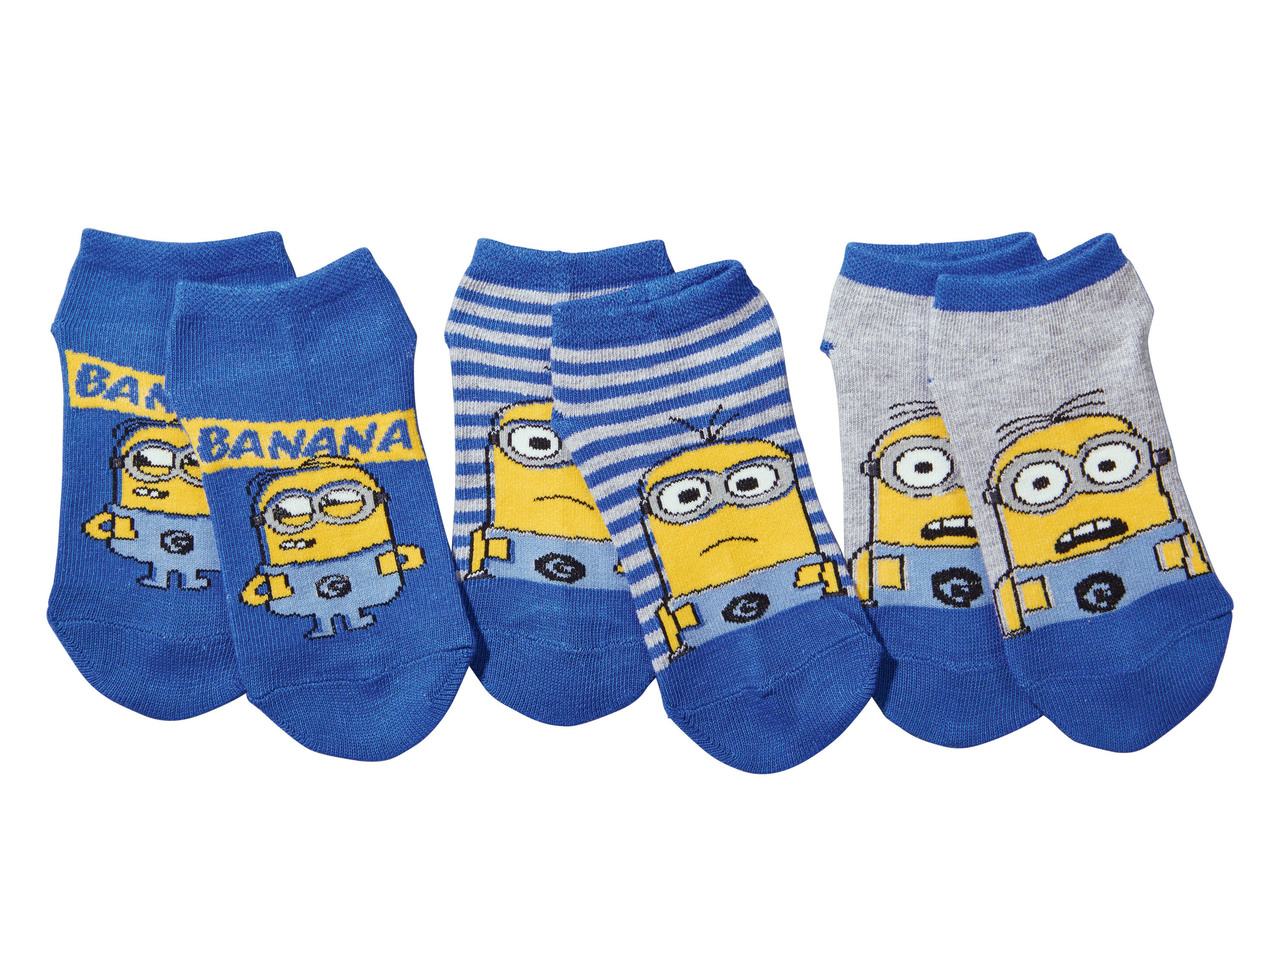 Boys' "Minions" Socks